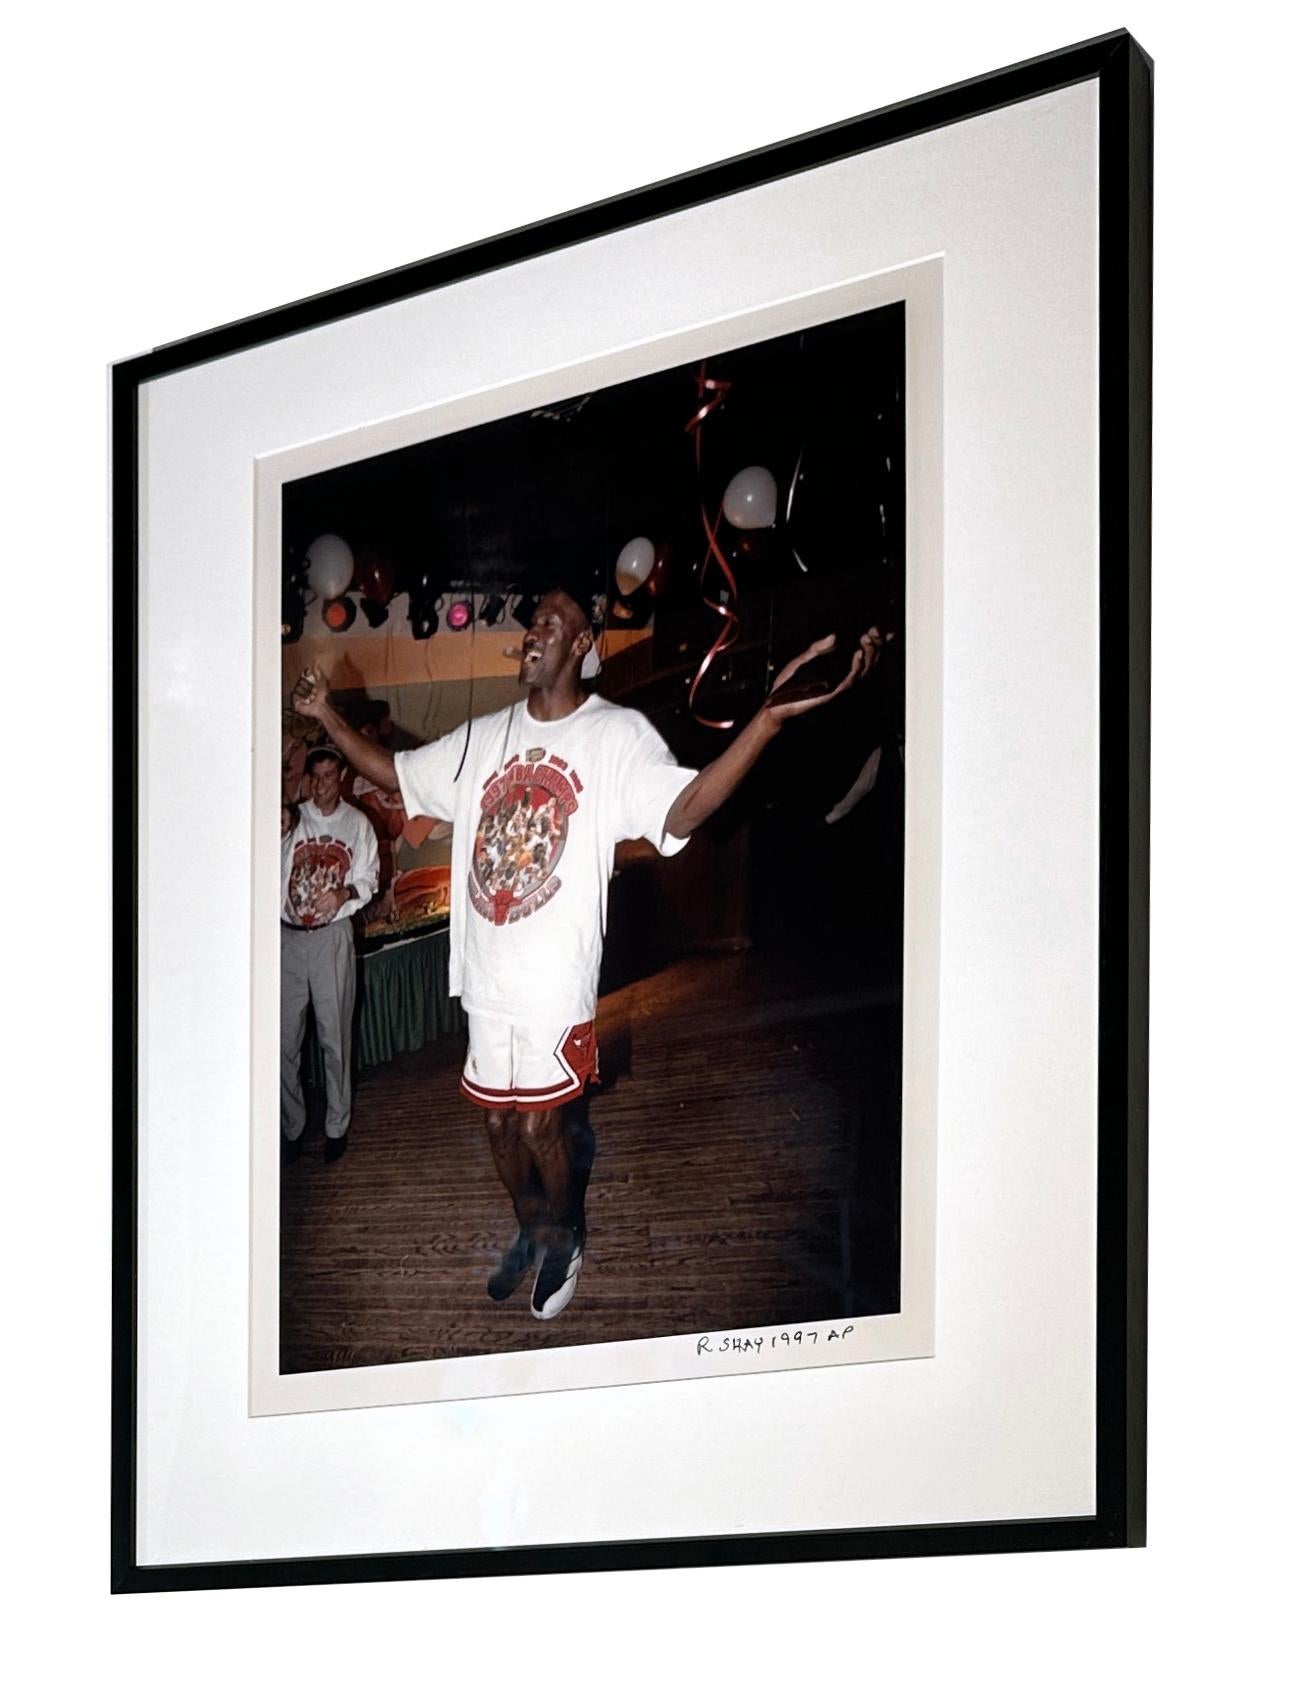 Shoeless Michael Jordan Celebrating 5th Championship Win, 1997 - Color Photo - Photograph by Richard Shay